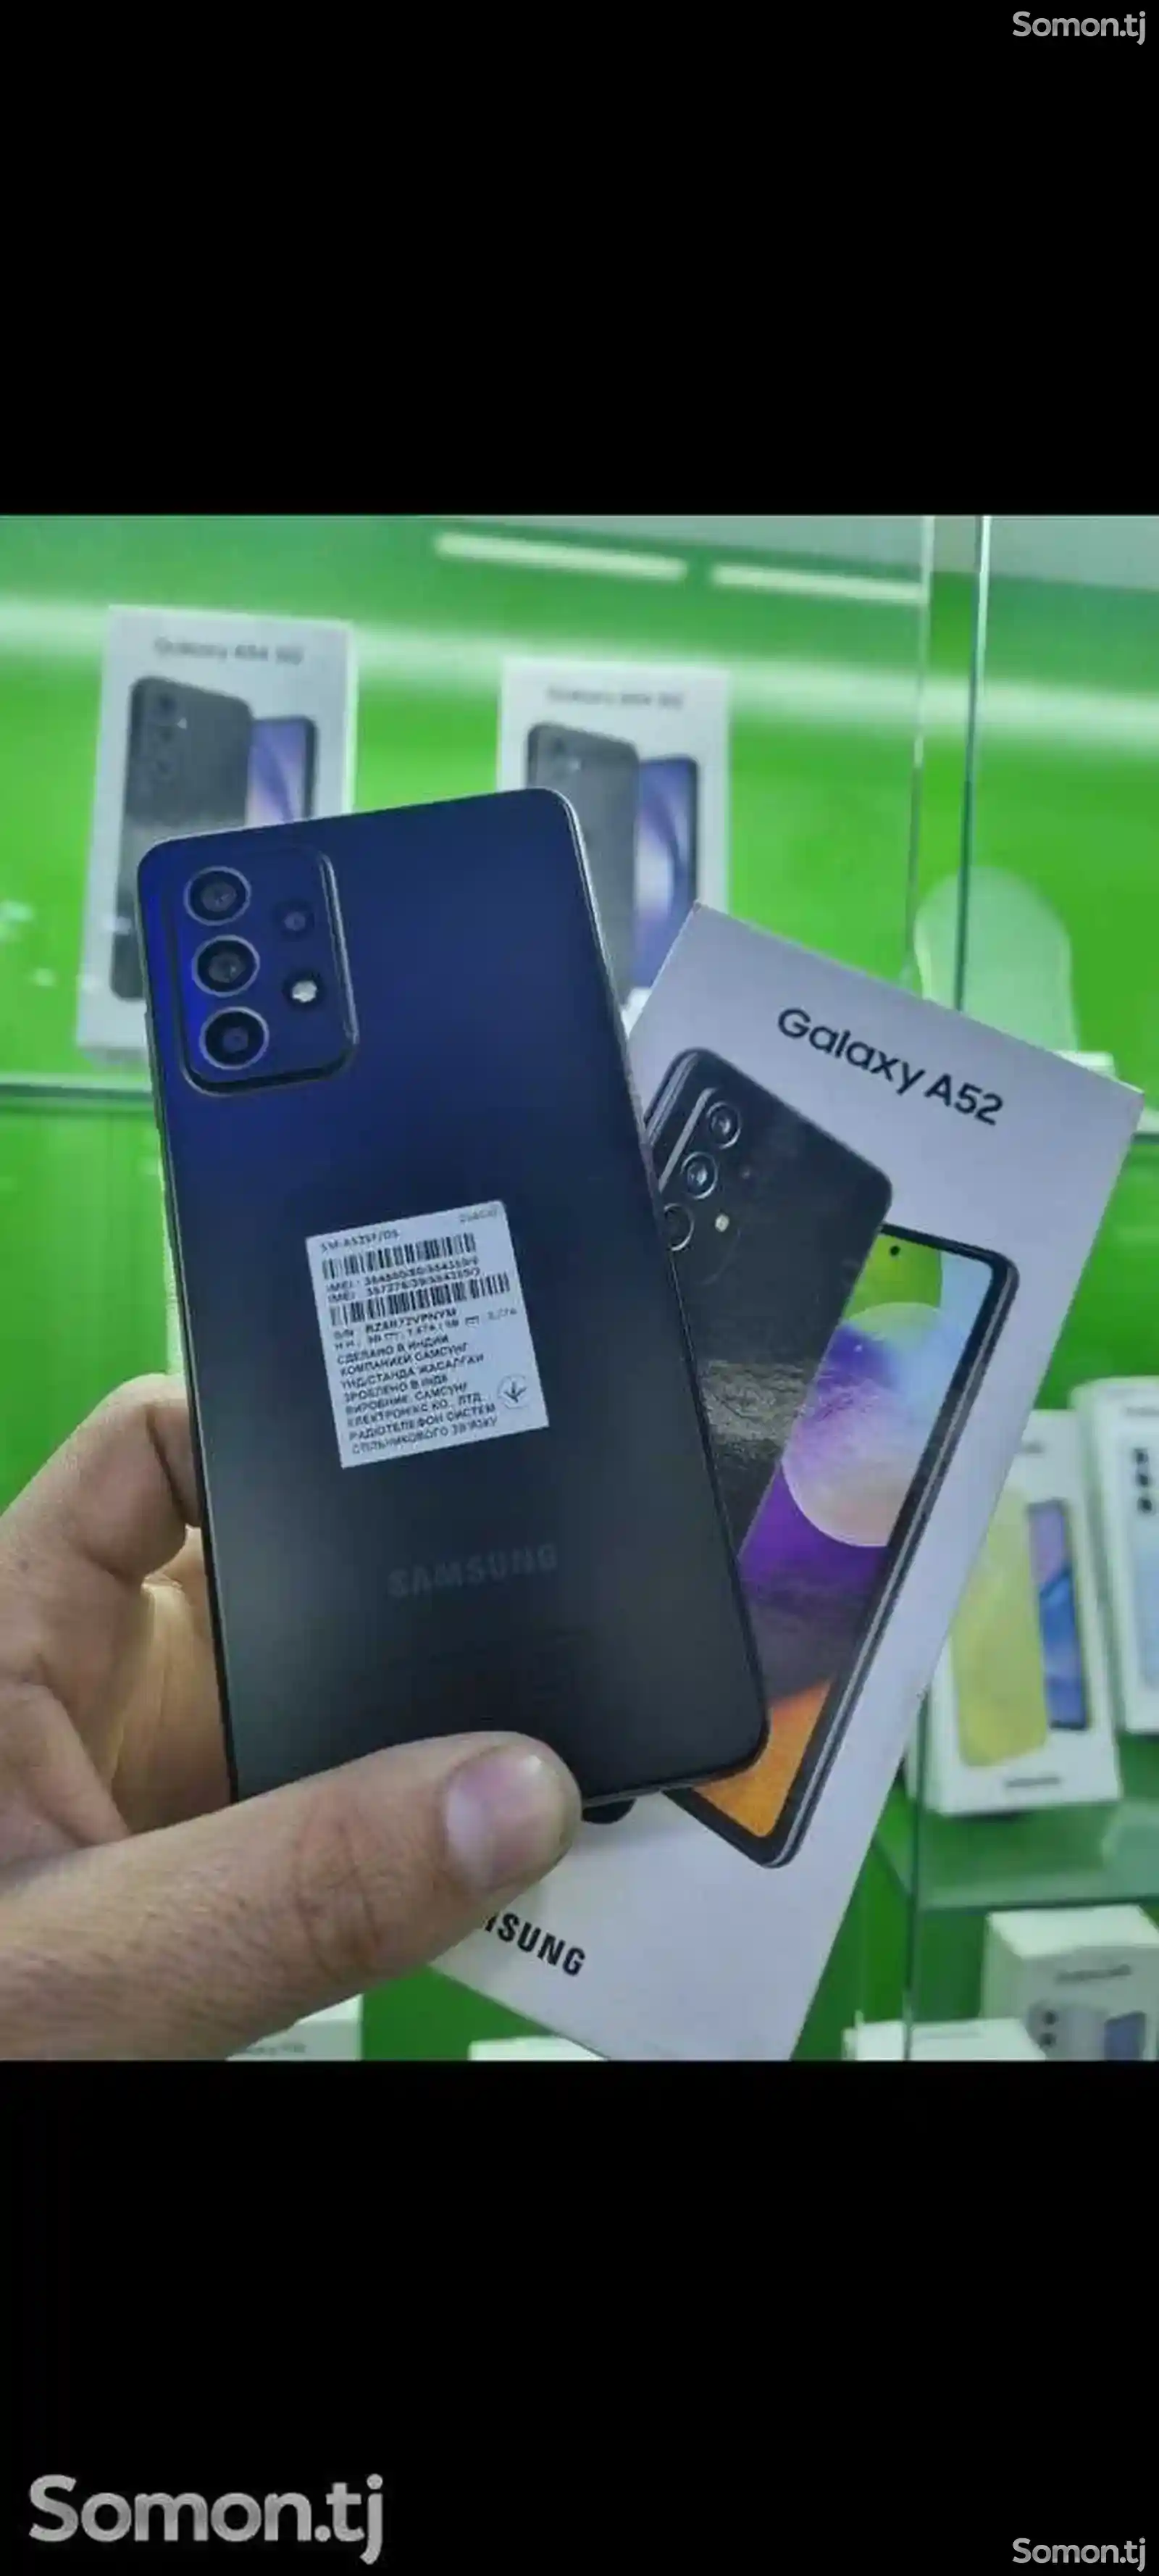 Samsung Galaxy А52 black 128gb-1